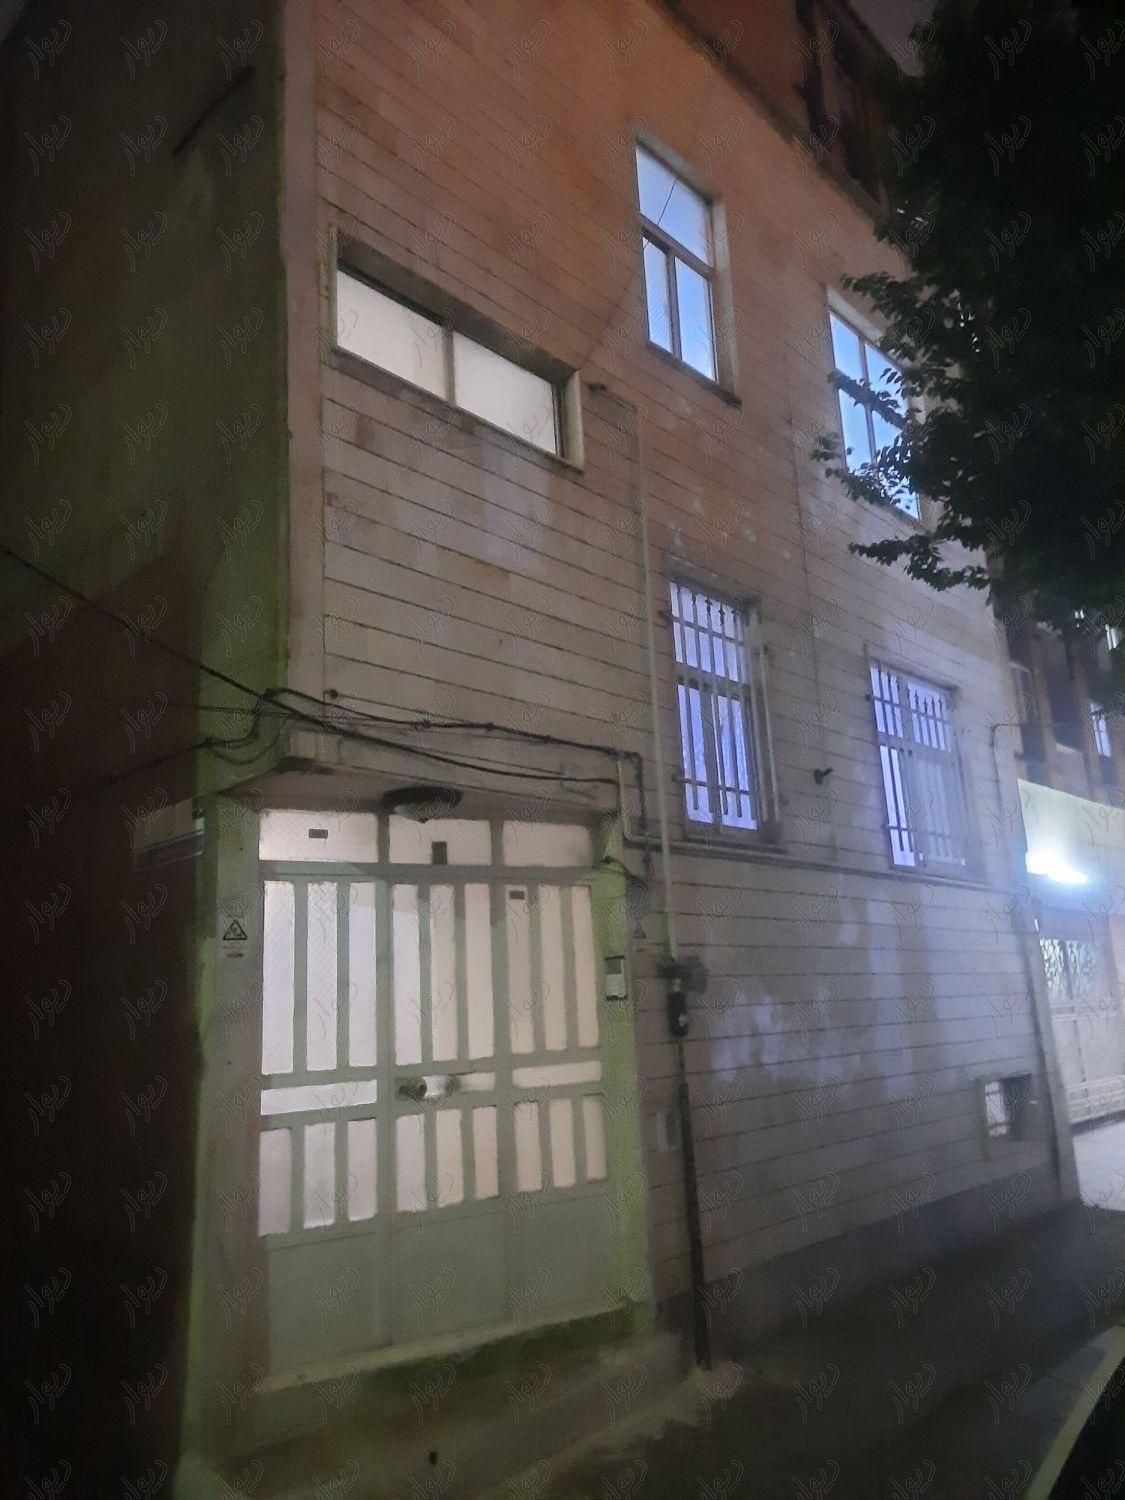 خانه آپارتمانی کلنگی|فروش زمین و کلنگی|تهران, طیب|دیوار